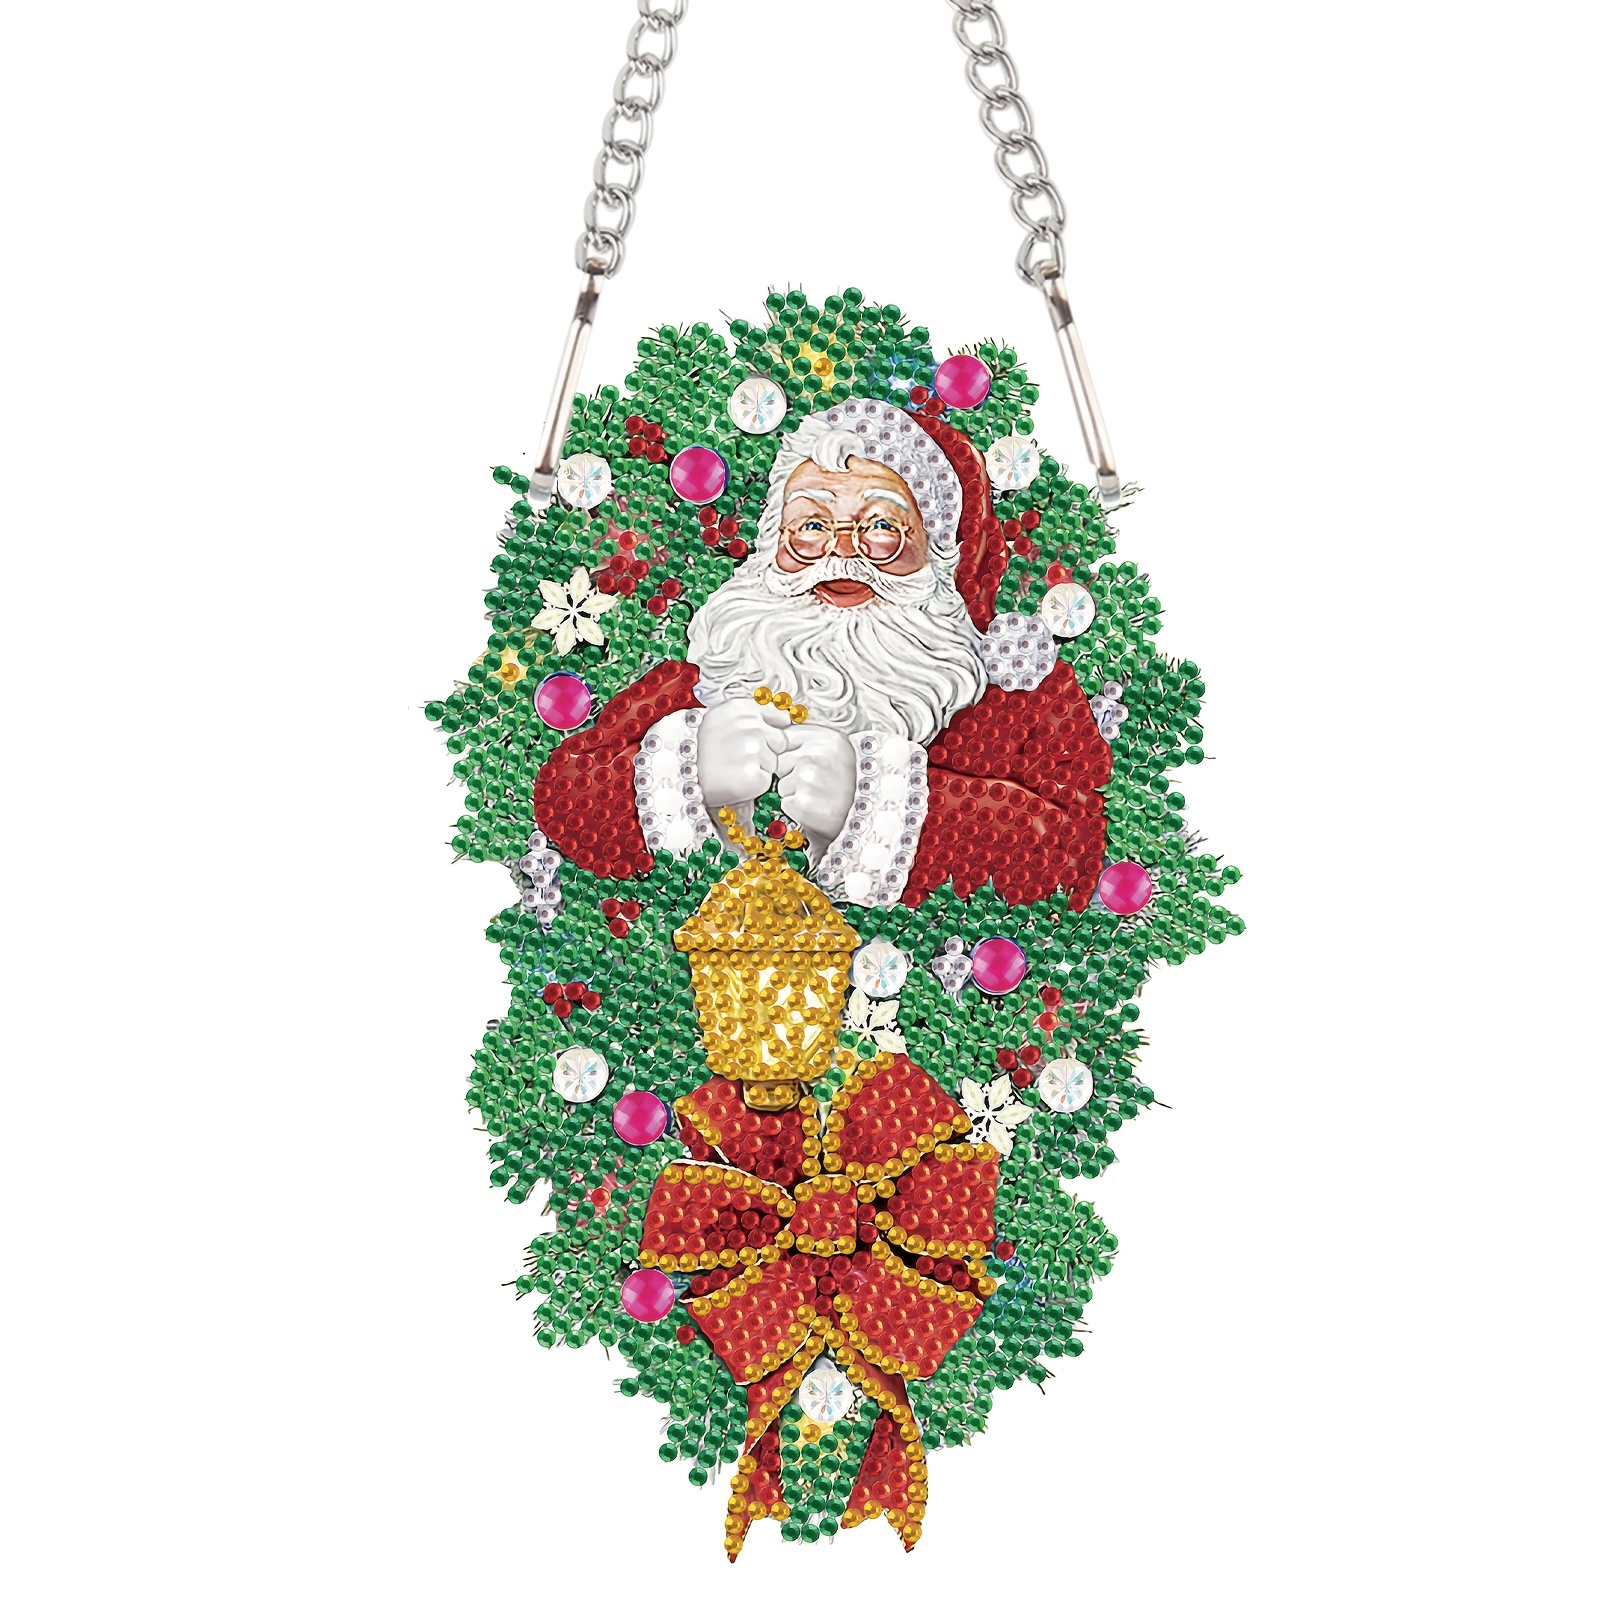 Dropship 10pcs DIY Diamond Painting Christmas Decorations Xmas Tree Pendant  Hanging Ornament Santa Claus Pattern Mosaic Kit Navided Decor to Sell  Online at a Lower Price